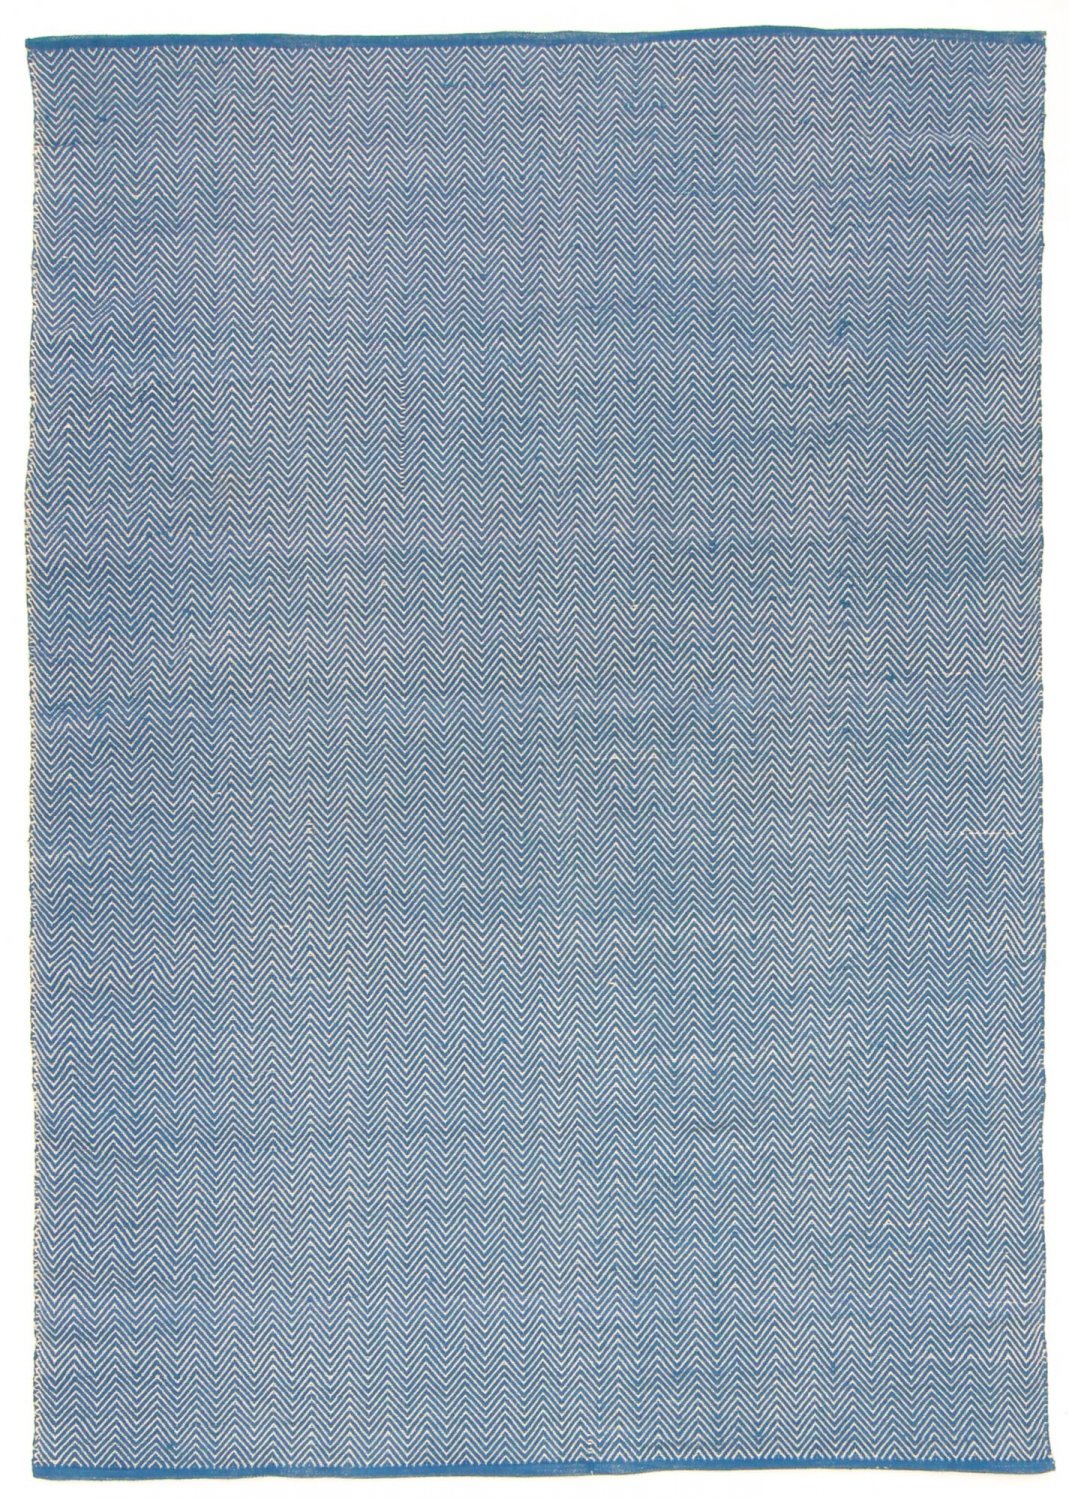 Filleryer - Marina (blå)